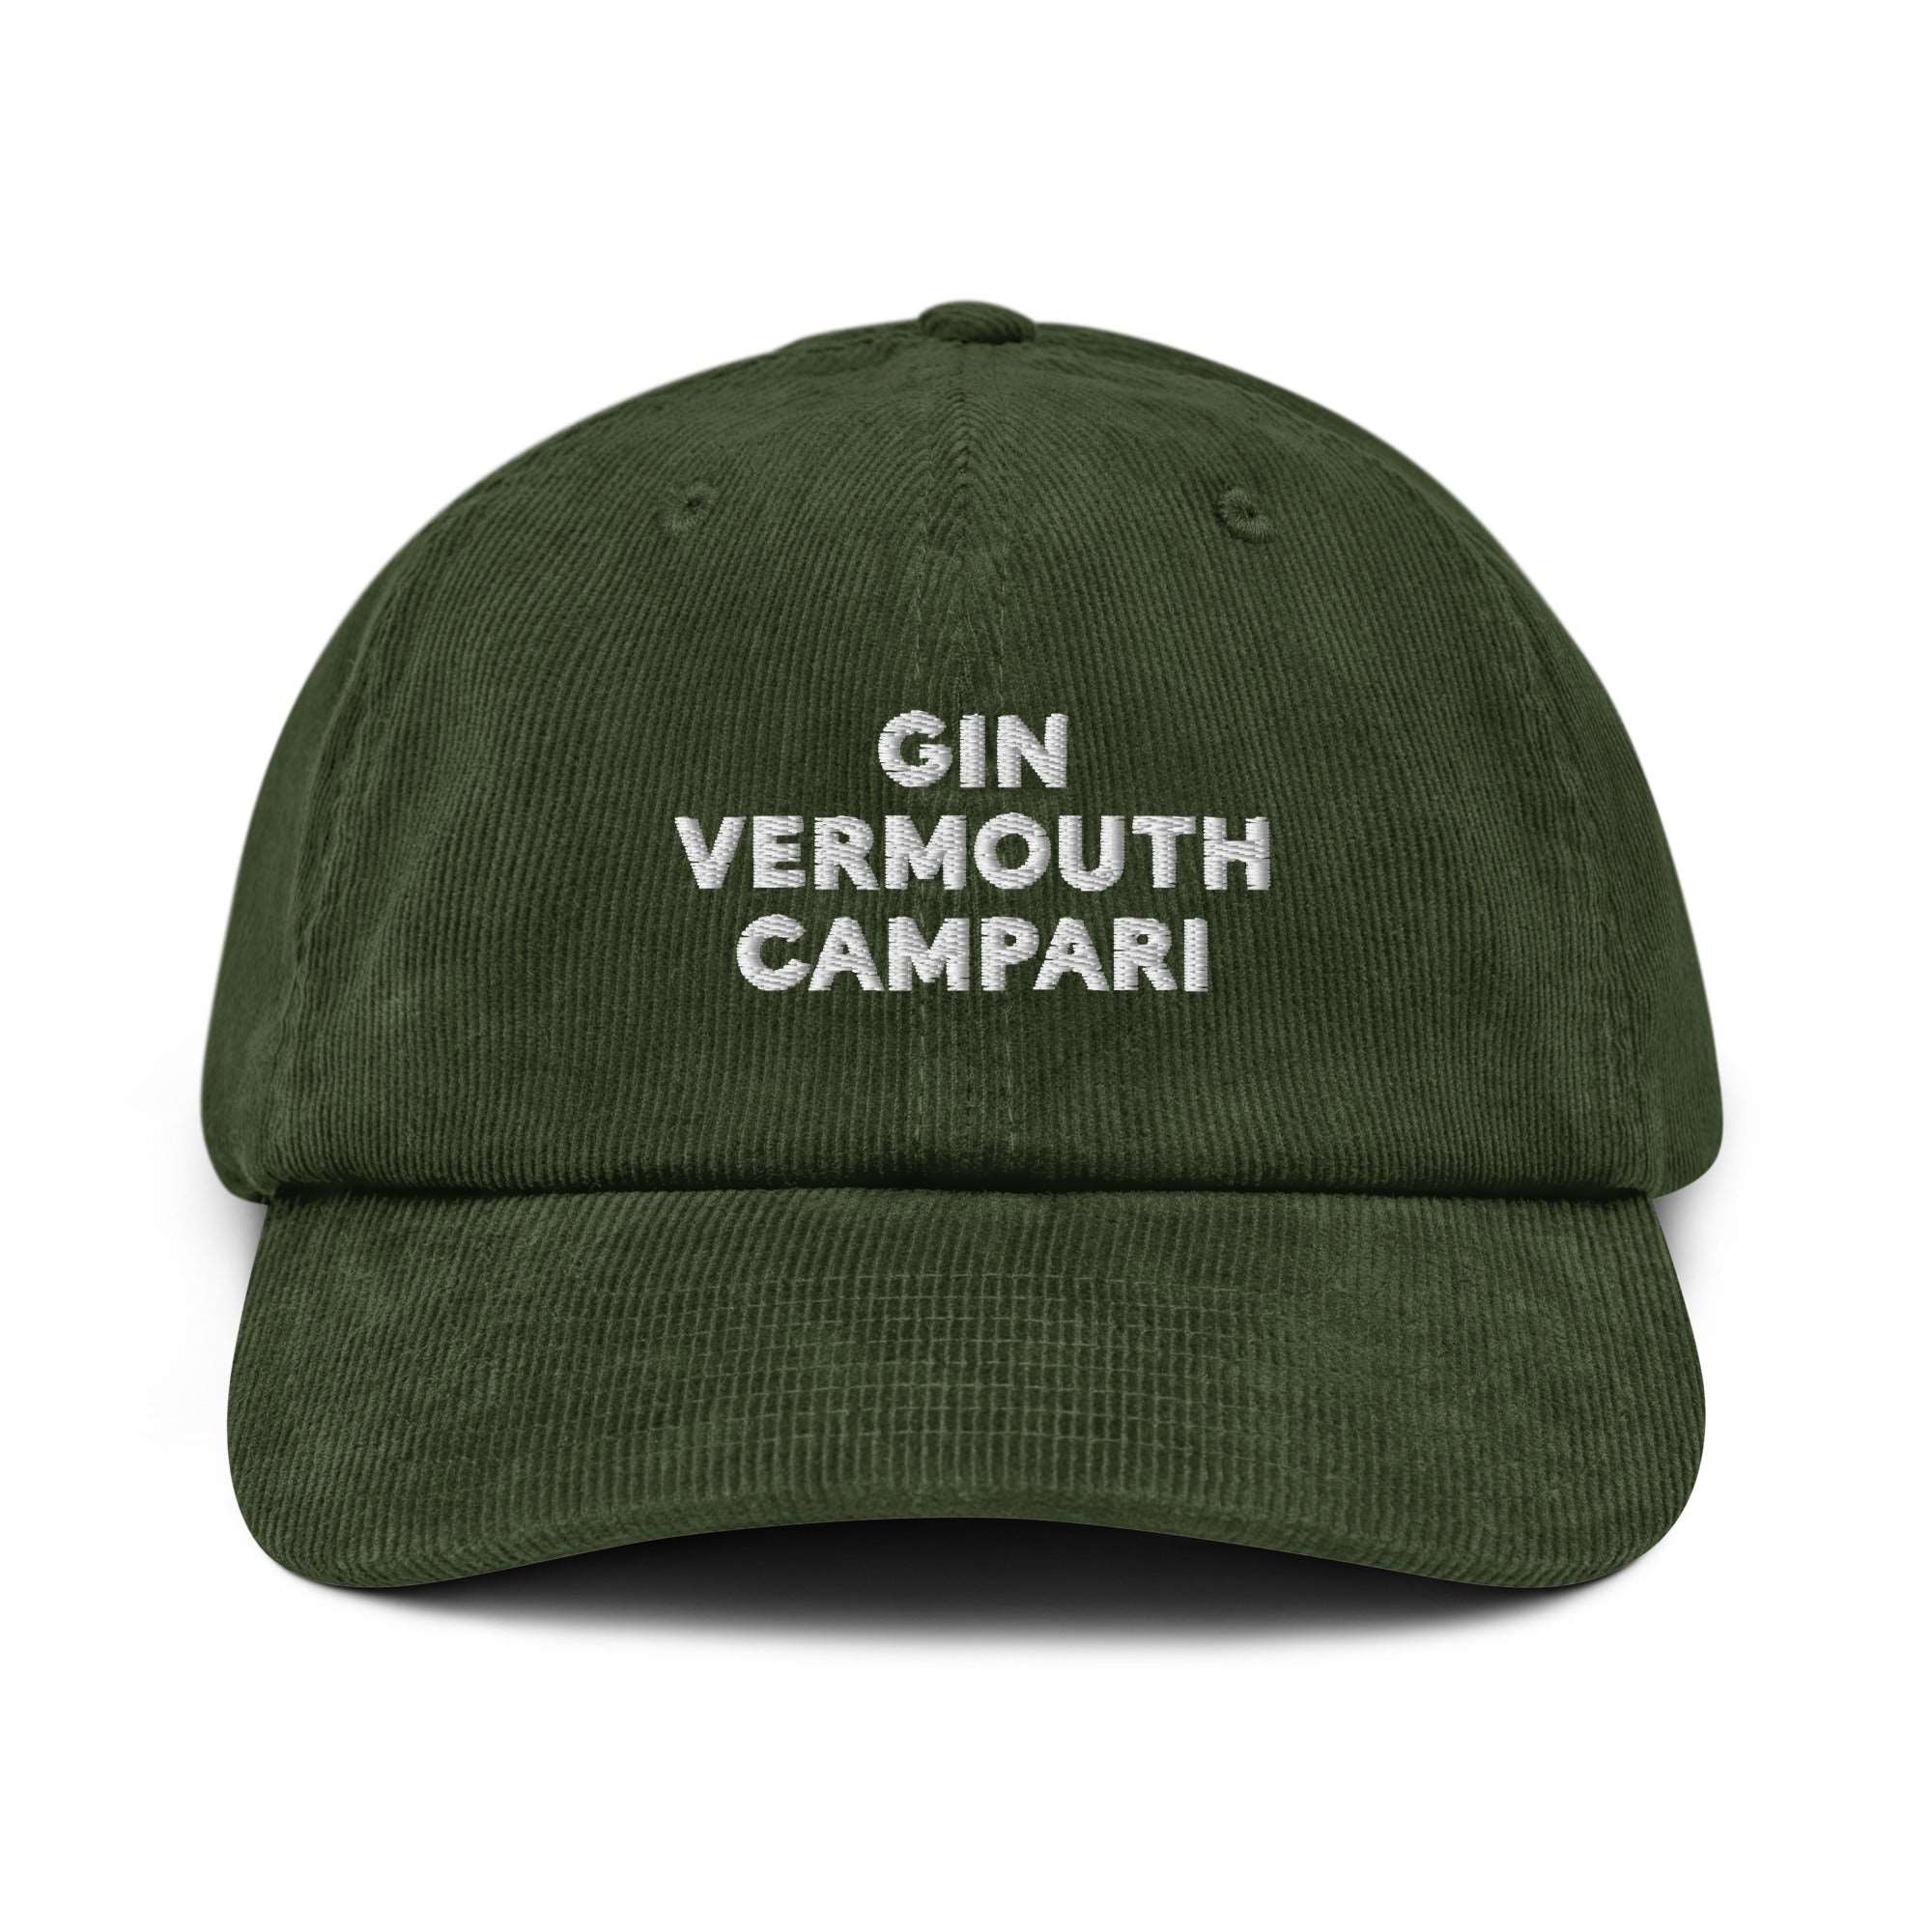 Gin Vermouth Campari - Corduroy Cap